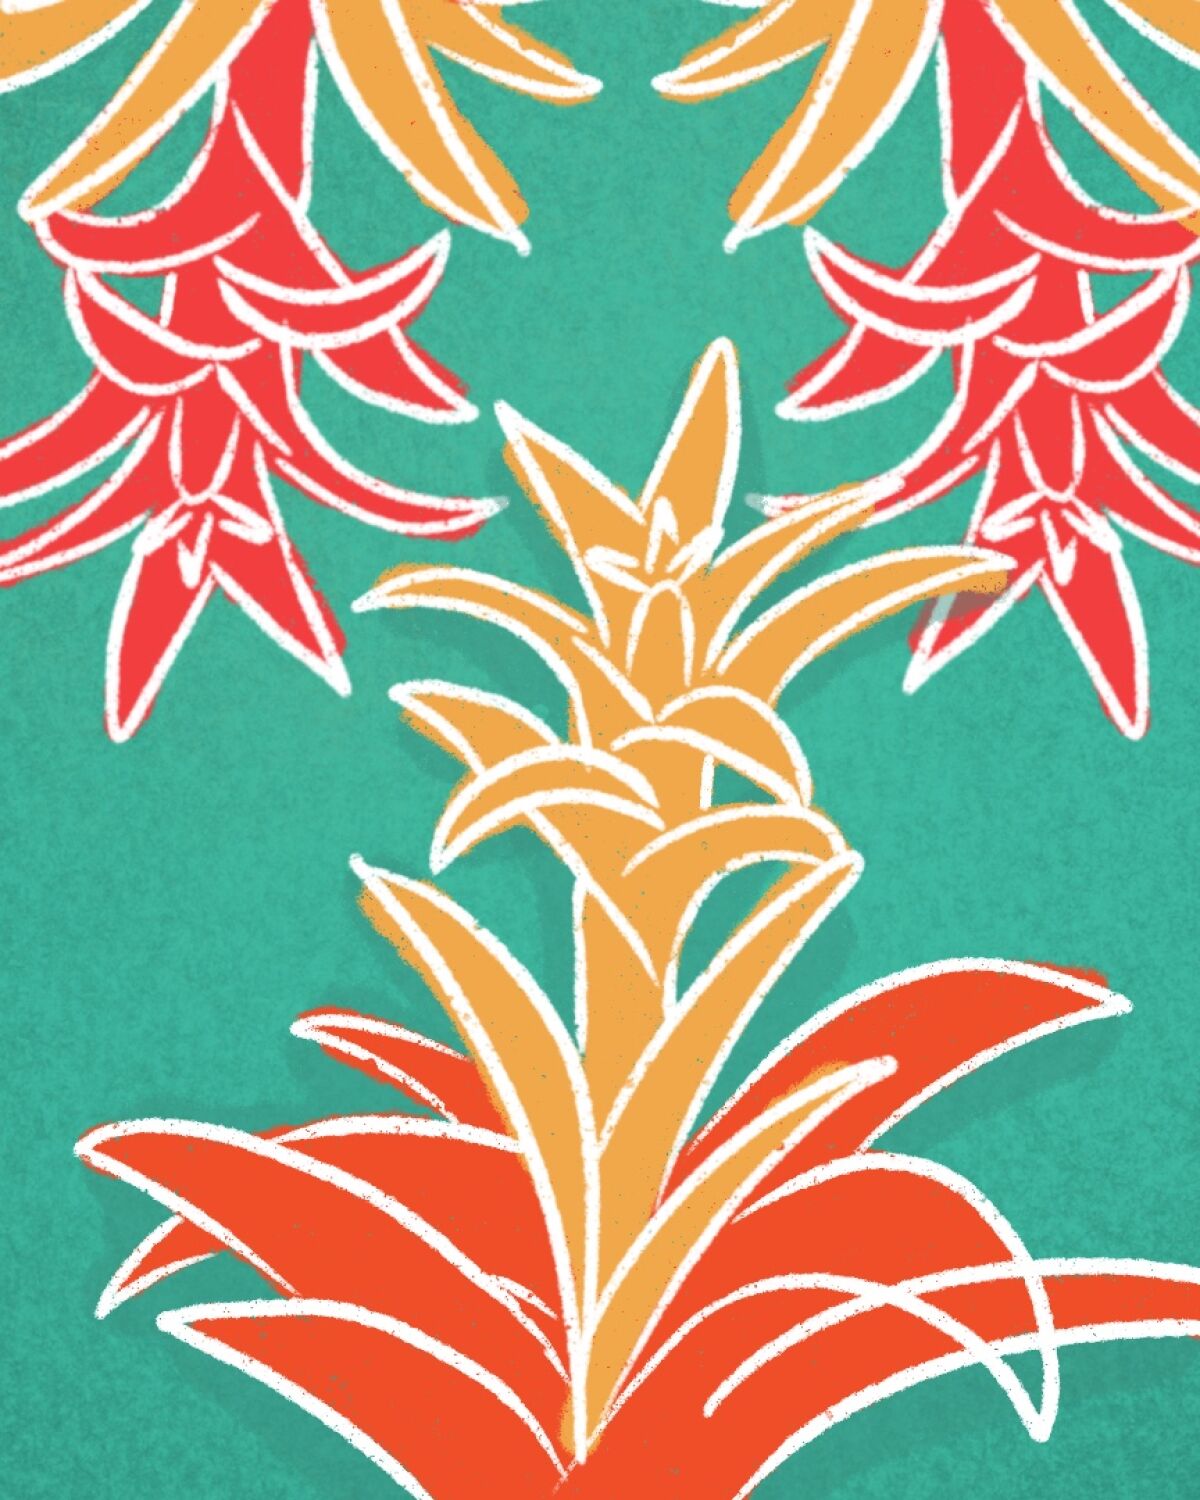 Illustration of bromeliads.